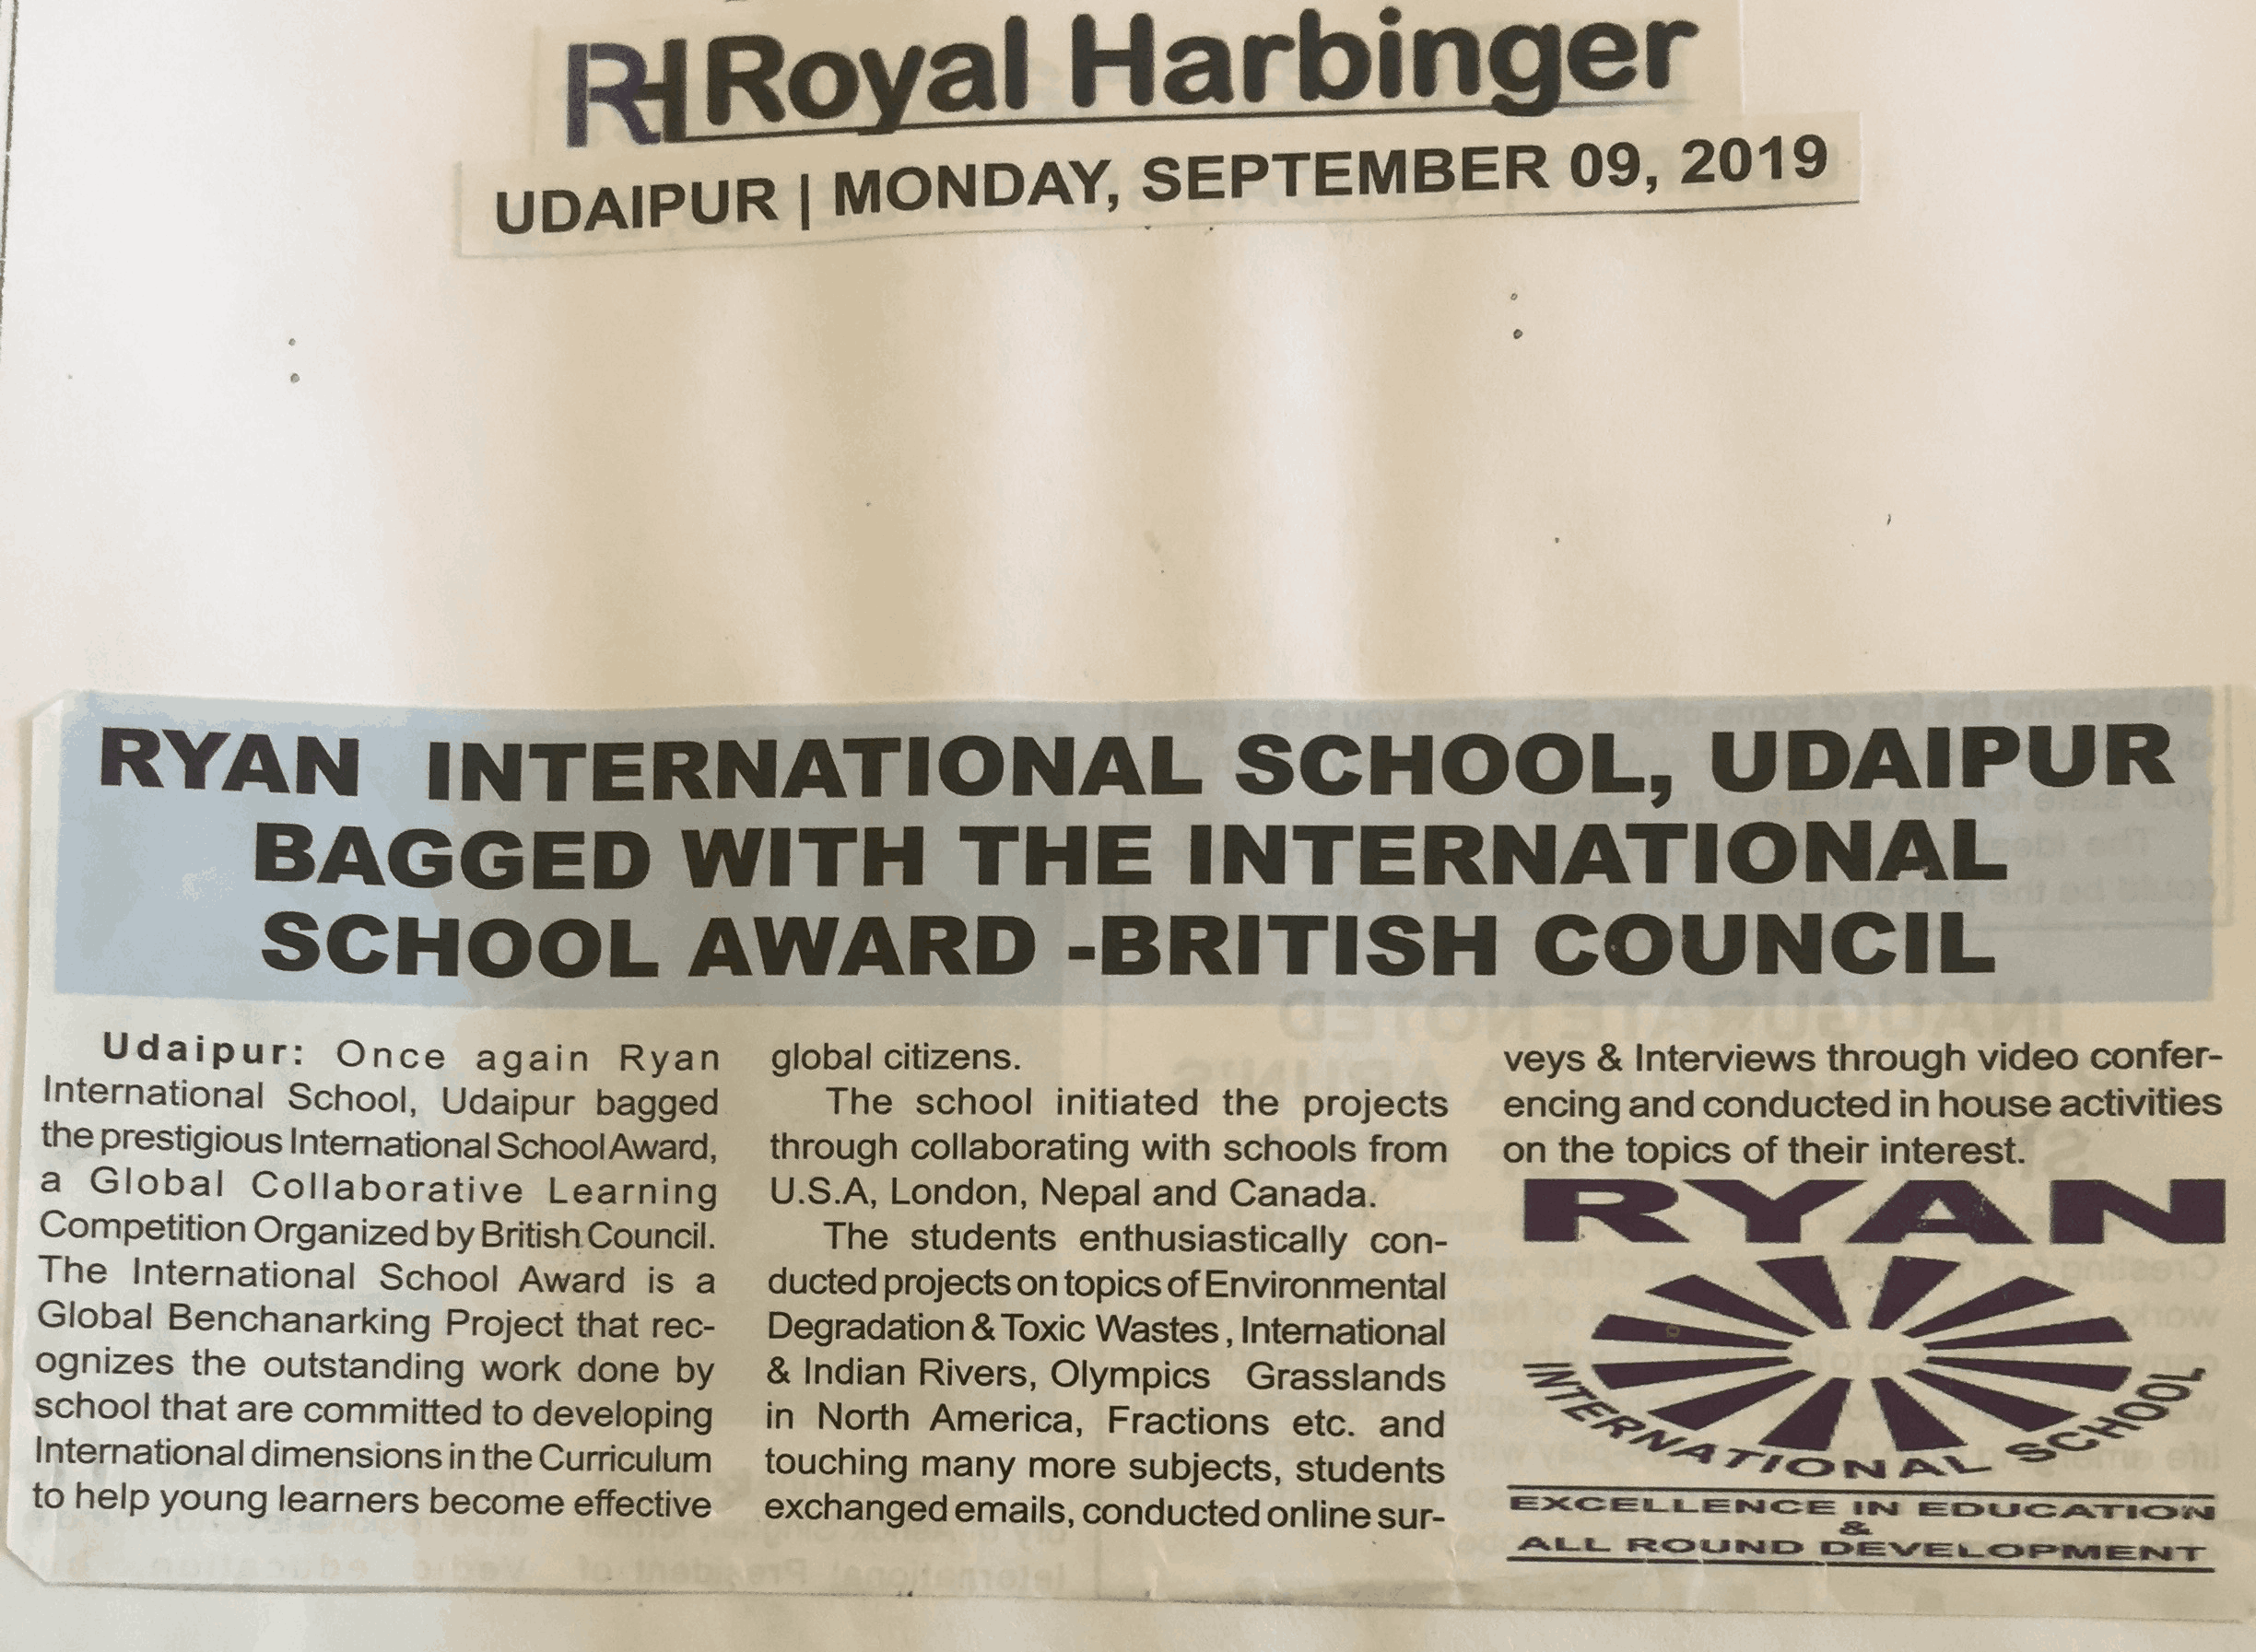 RYAN UDAIPUR AWARD WITH BRITISH COUNCIL – ISA AWARD - Ryan international School, Udaipur